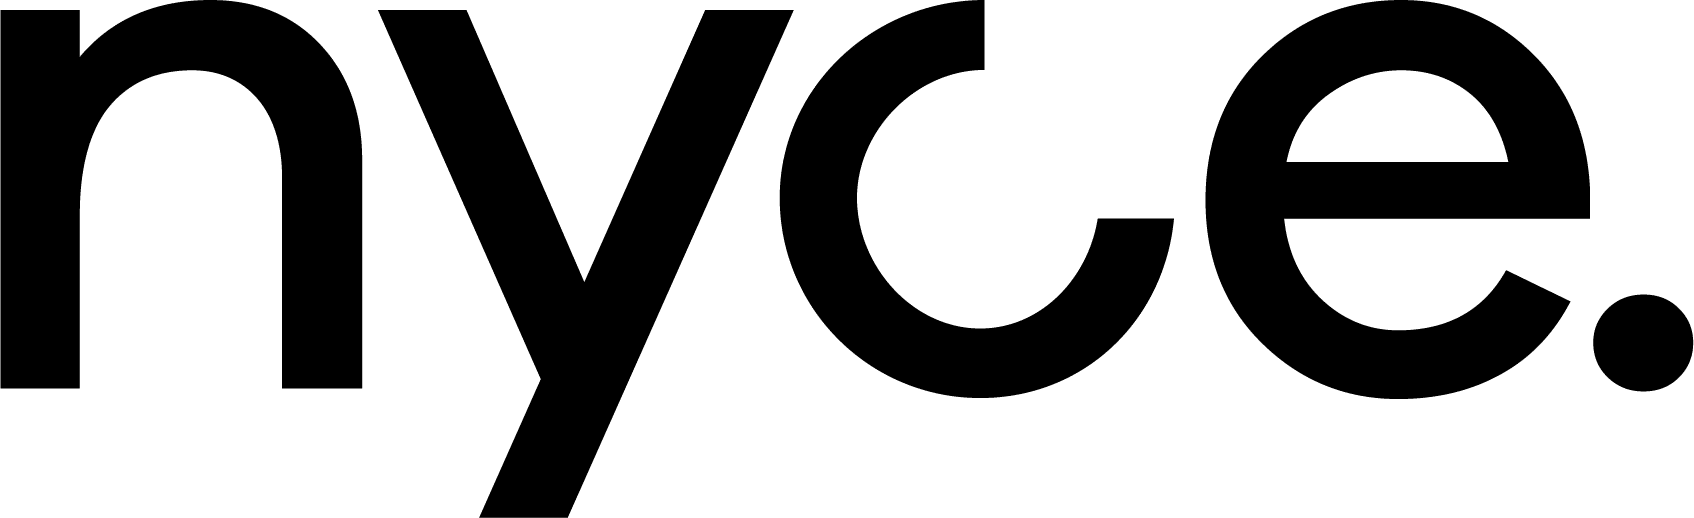 Nyce Logo - LogoDix